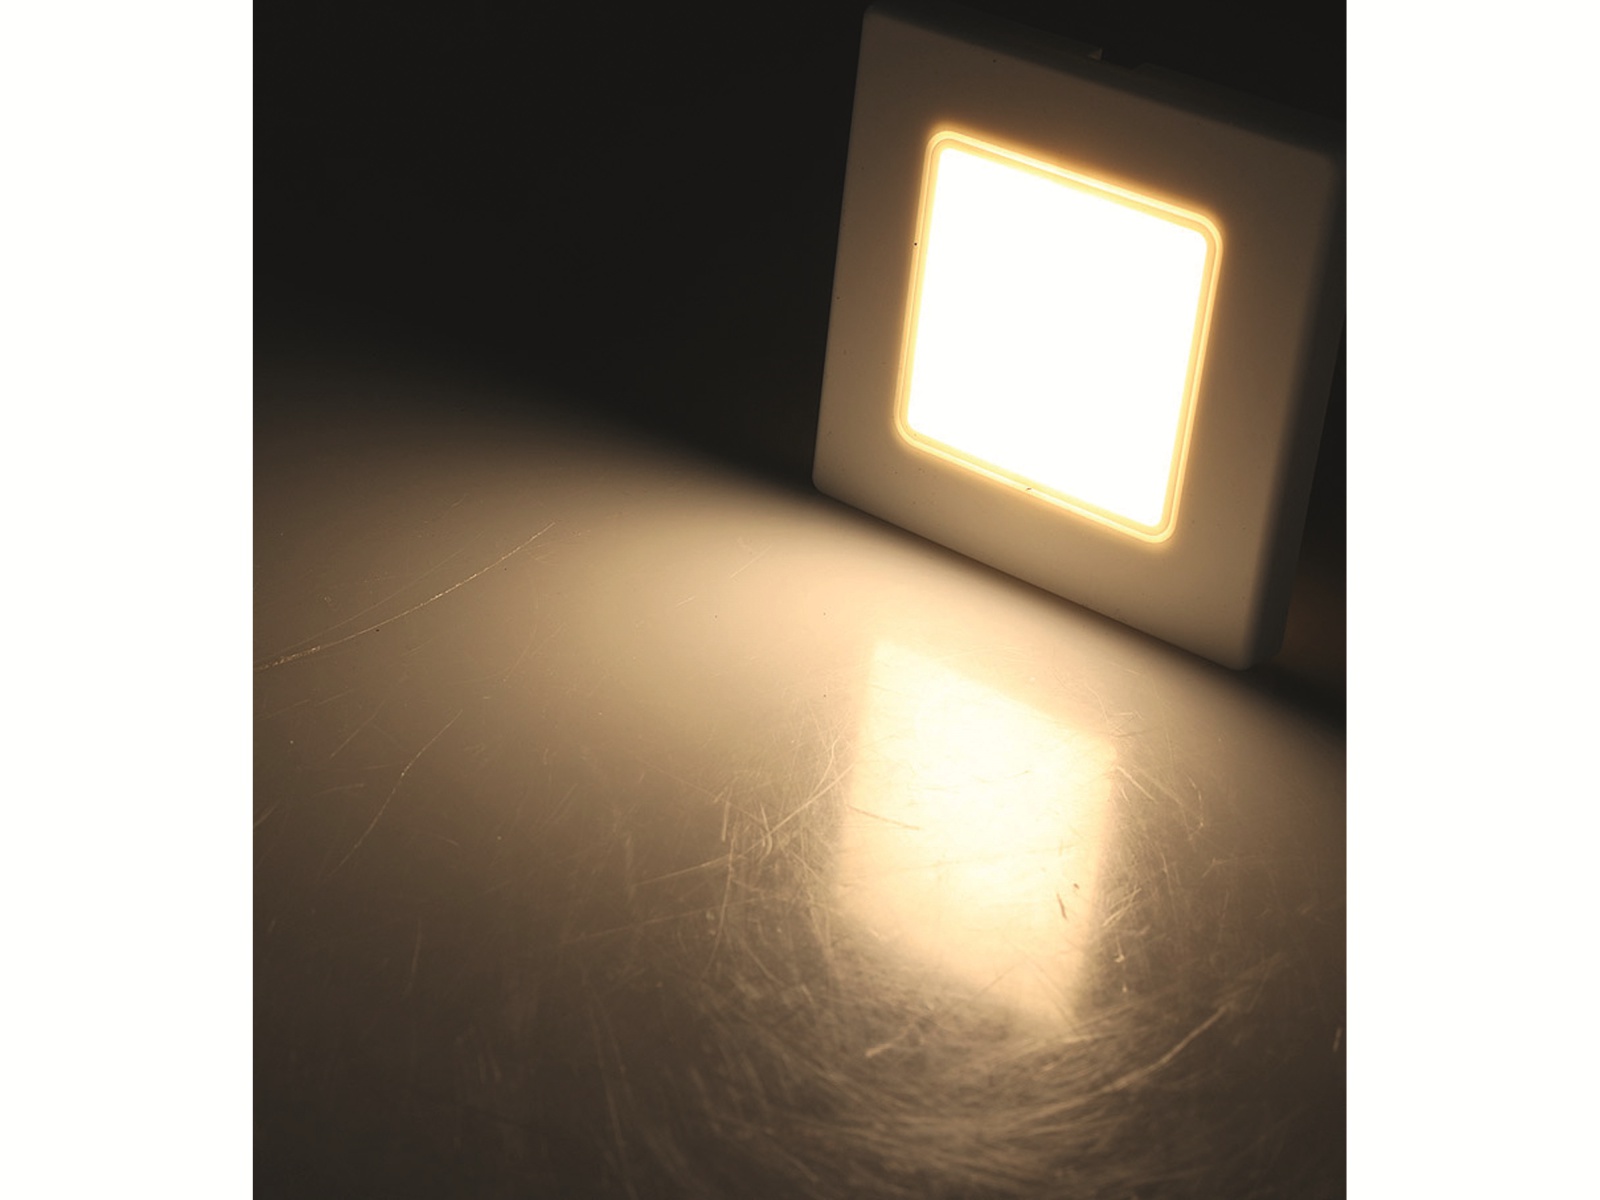 CHILITEC LED-Einbauleuchte EBL 86, 2,5 W, 3000 K, warmweiß, Rahmen silber